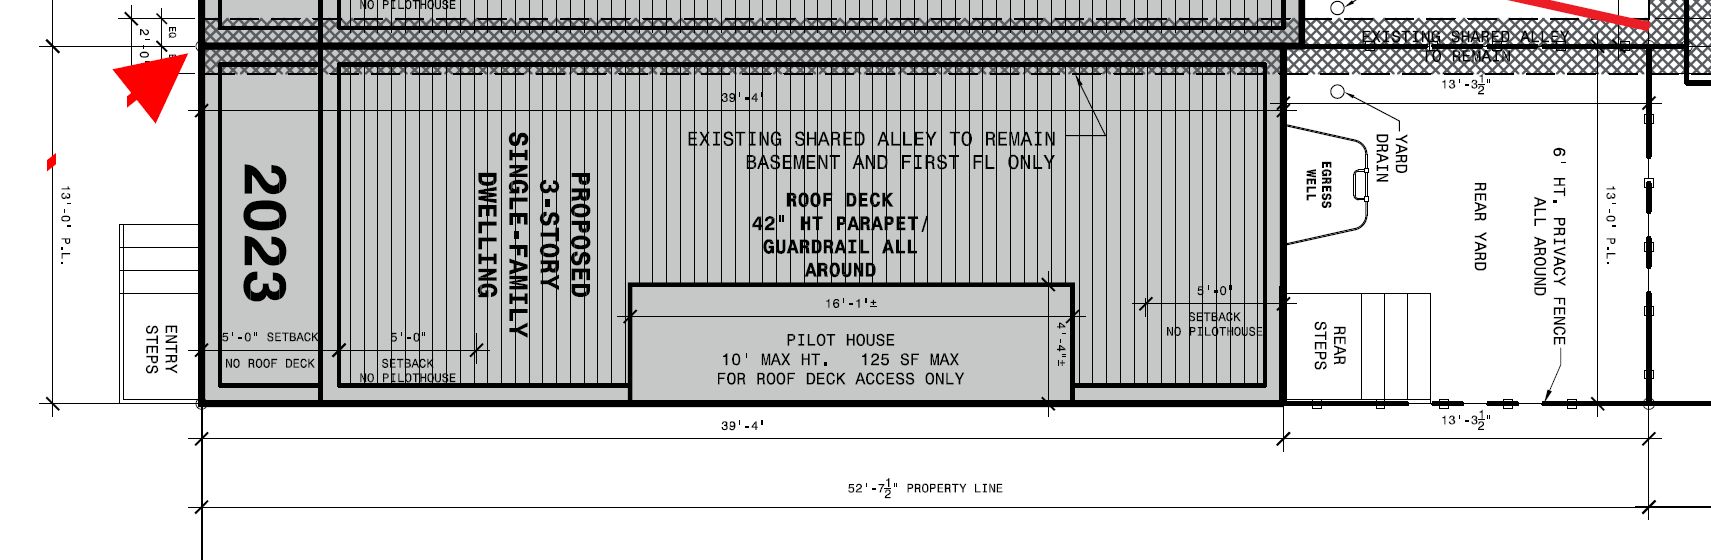 2023 Abigail Street. Sit4e plan. Credit: KJO Architecture via the City of Philadelphia